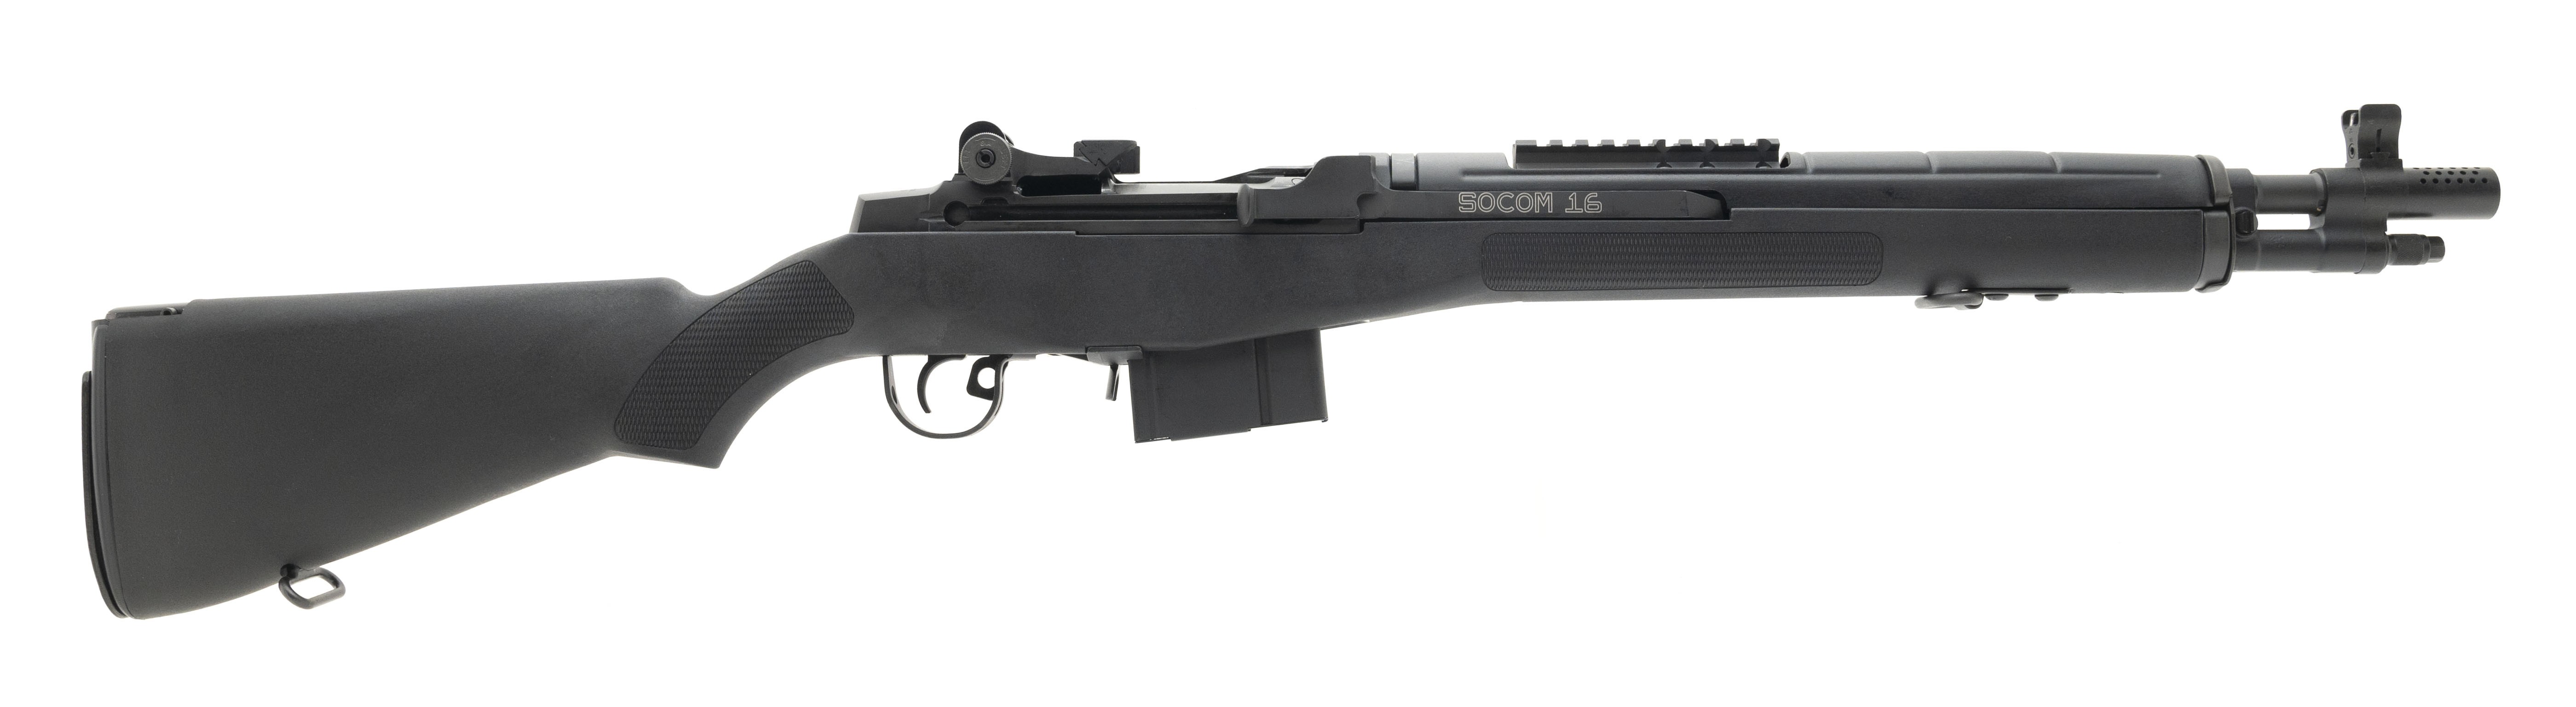 Springfield M1A SOCOM 16 Rifle .308 Win (NGZ544) New